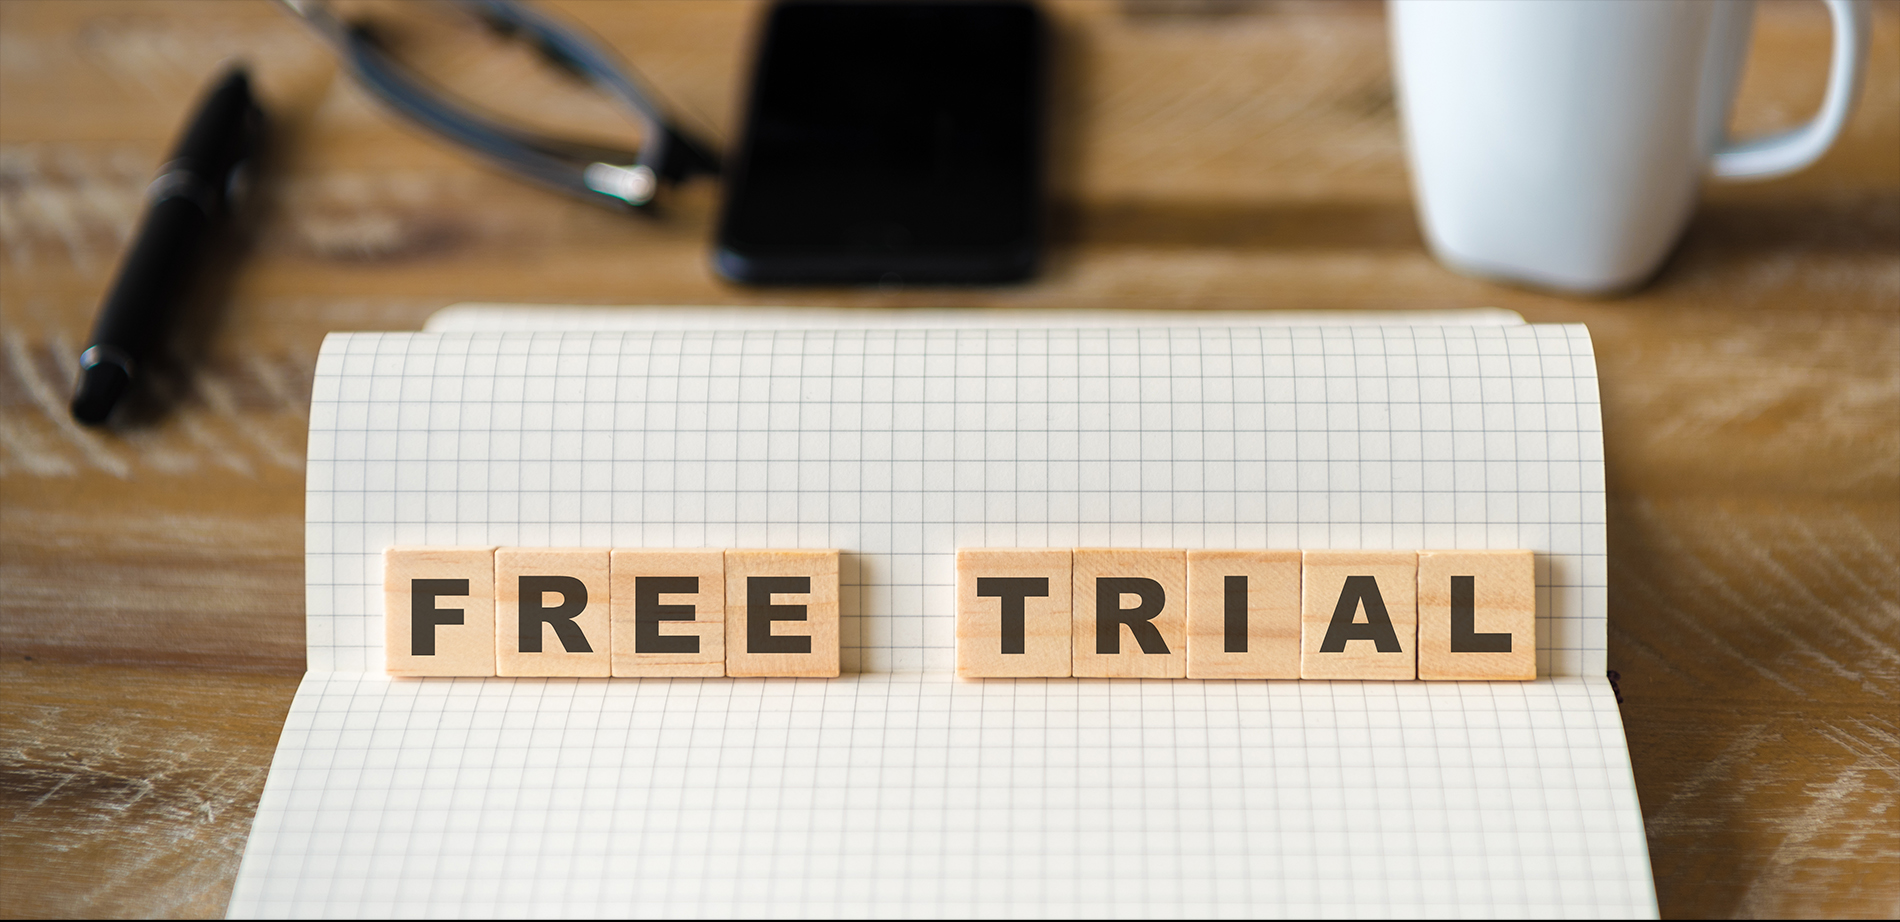 q2id free trial